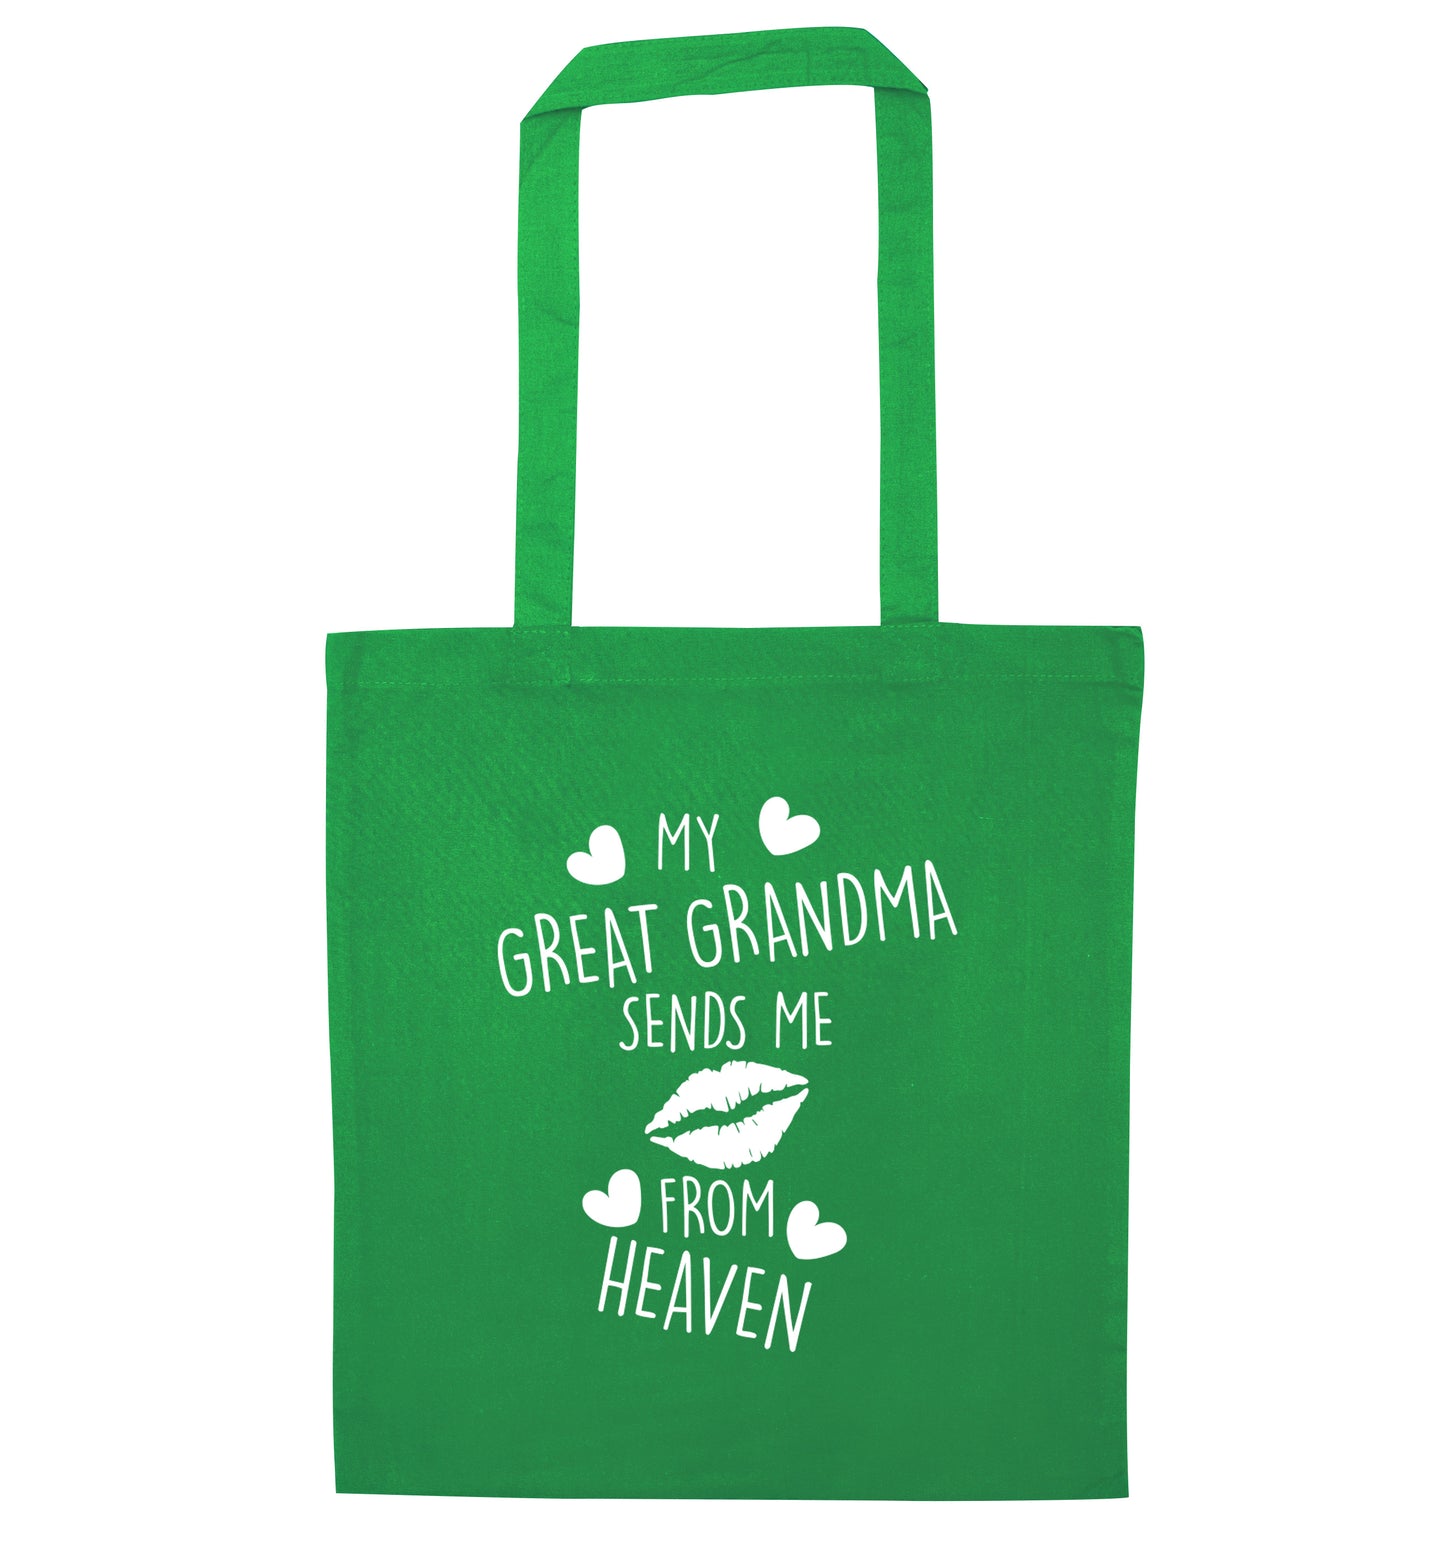 My great grandma sends me kisses from heaven green tote bag